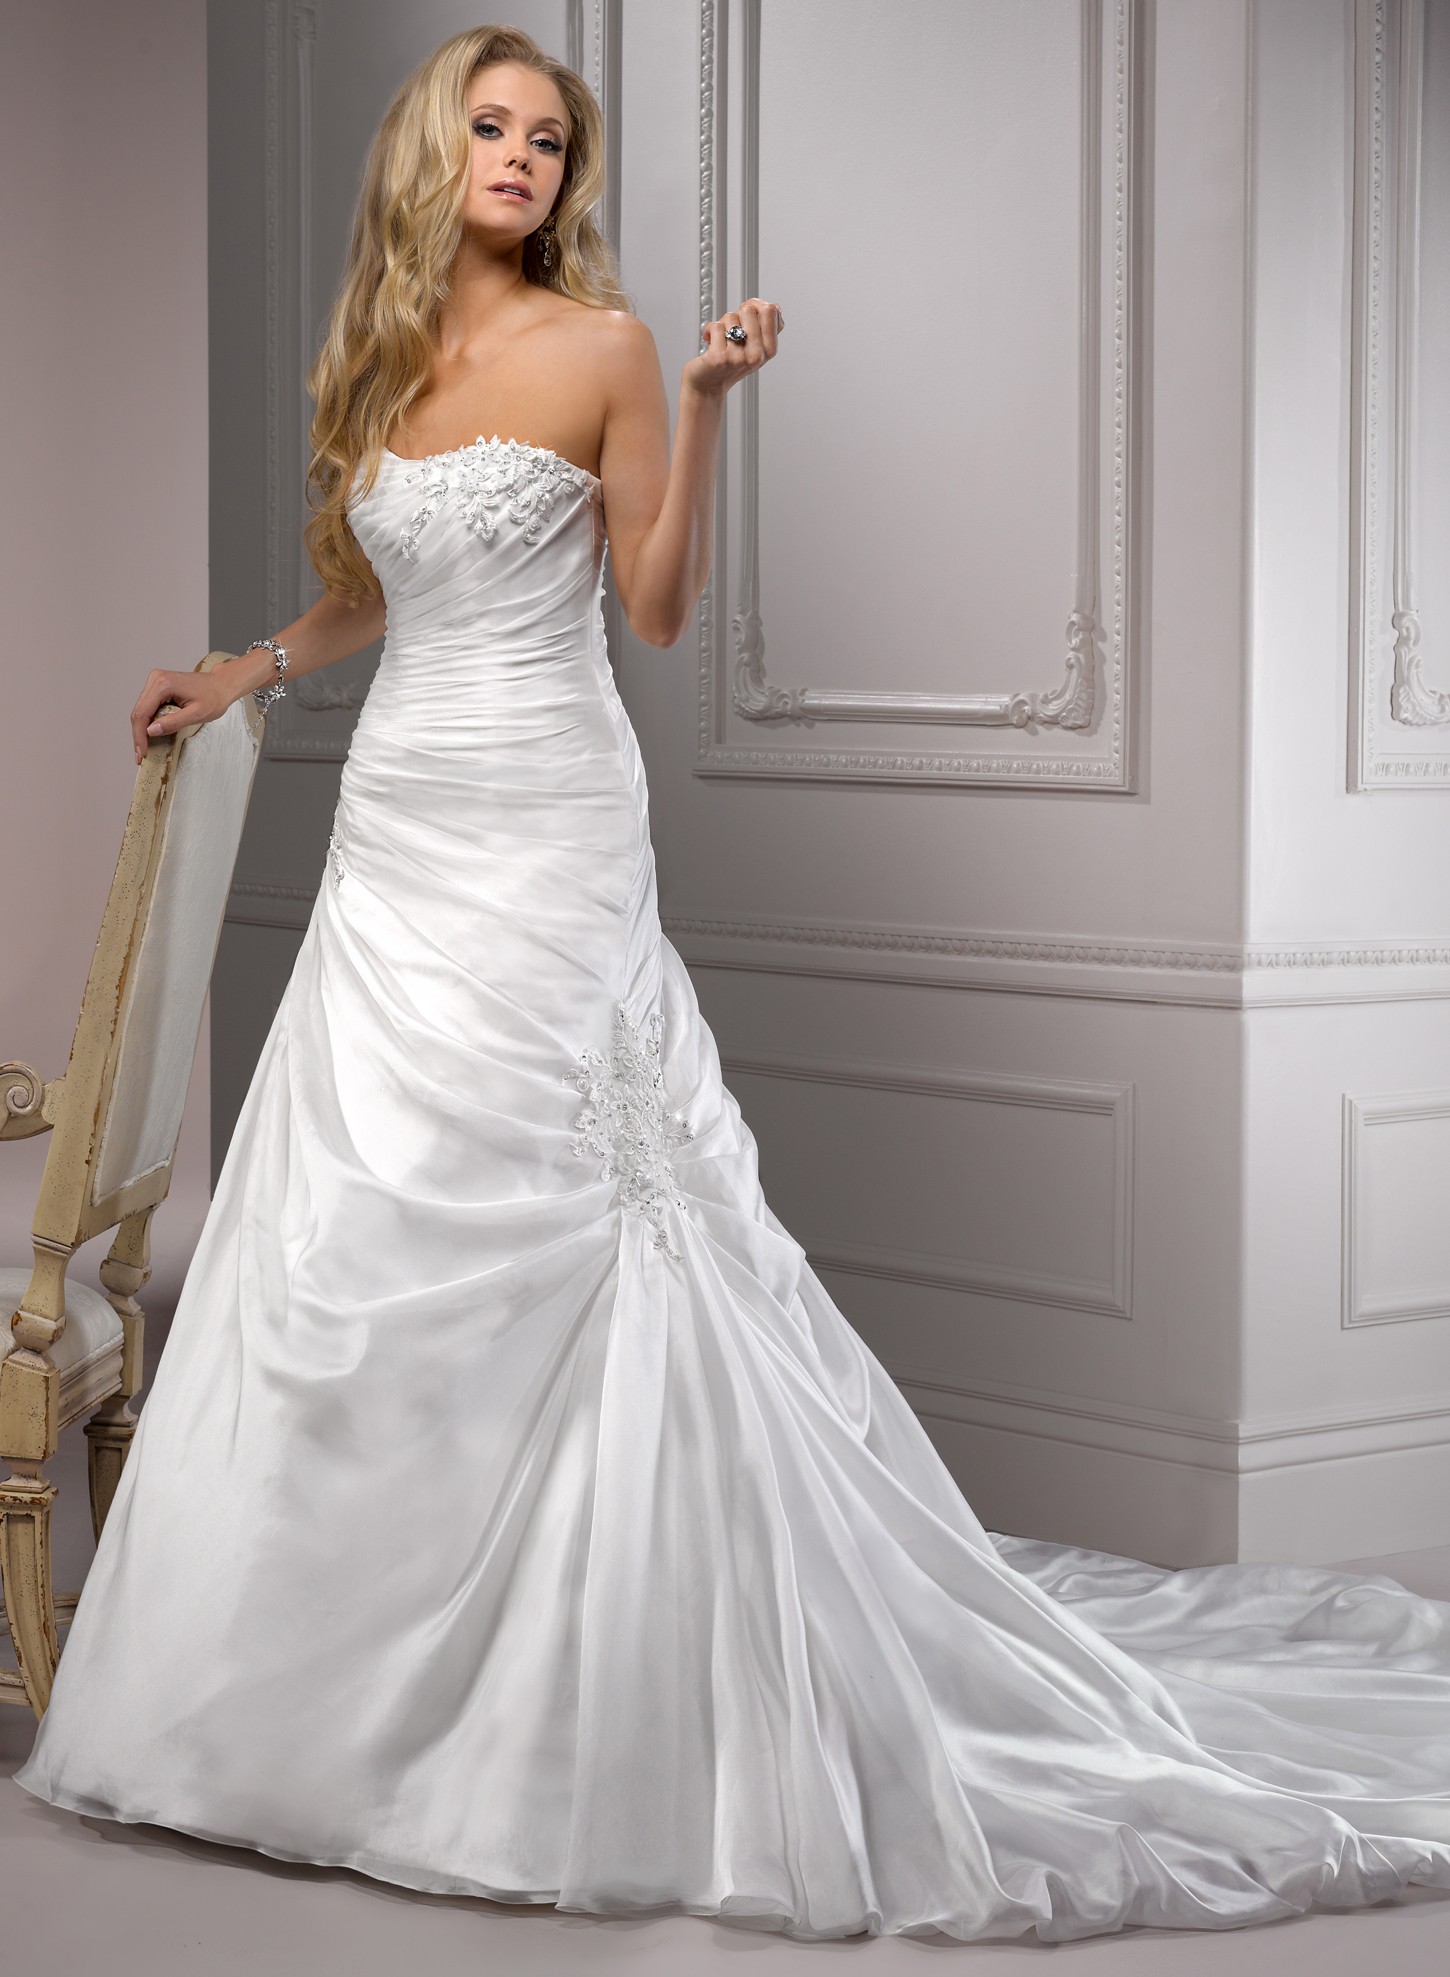 21 Gorgeous A-Line Wedding Dresses Ideas